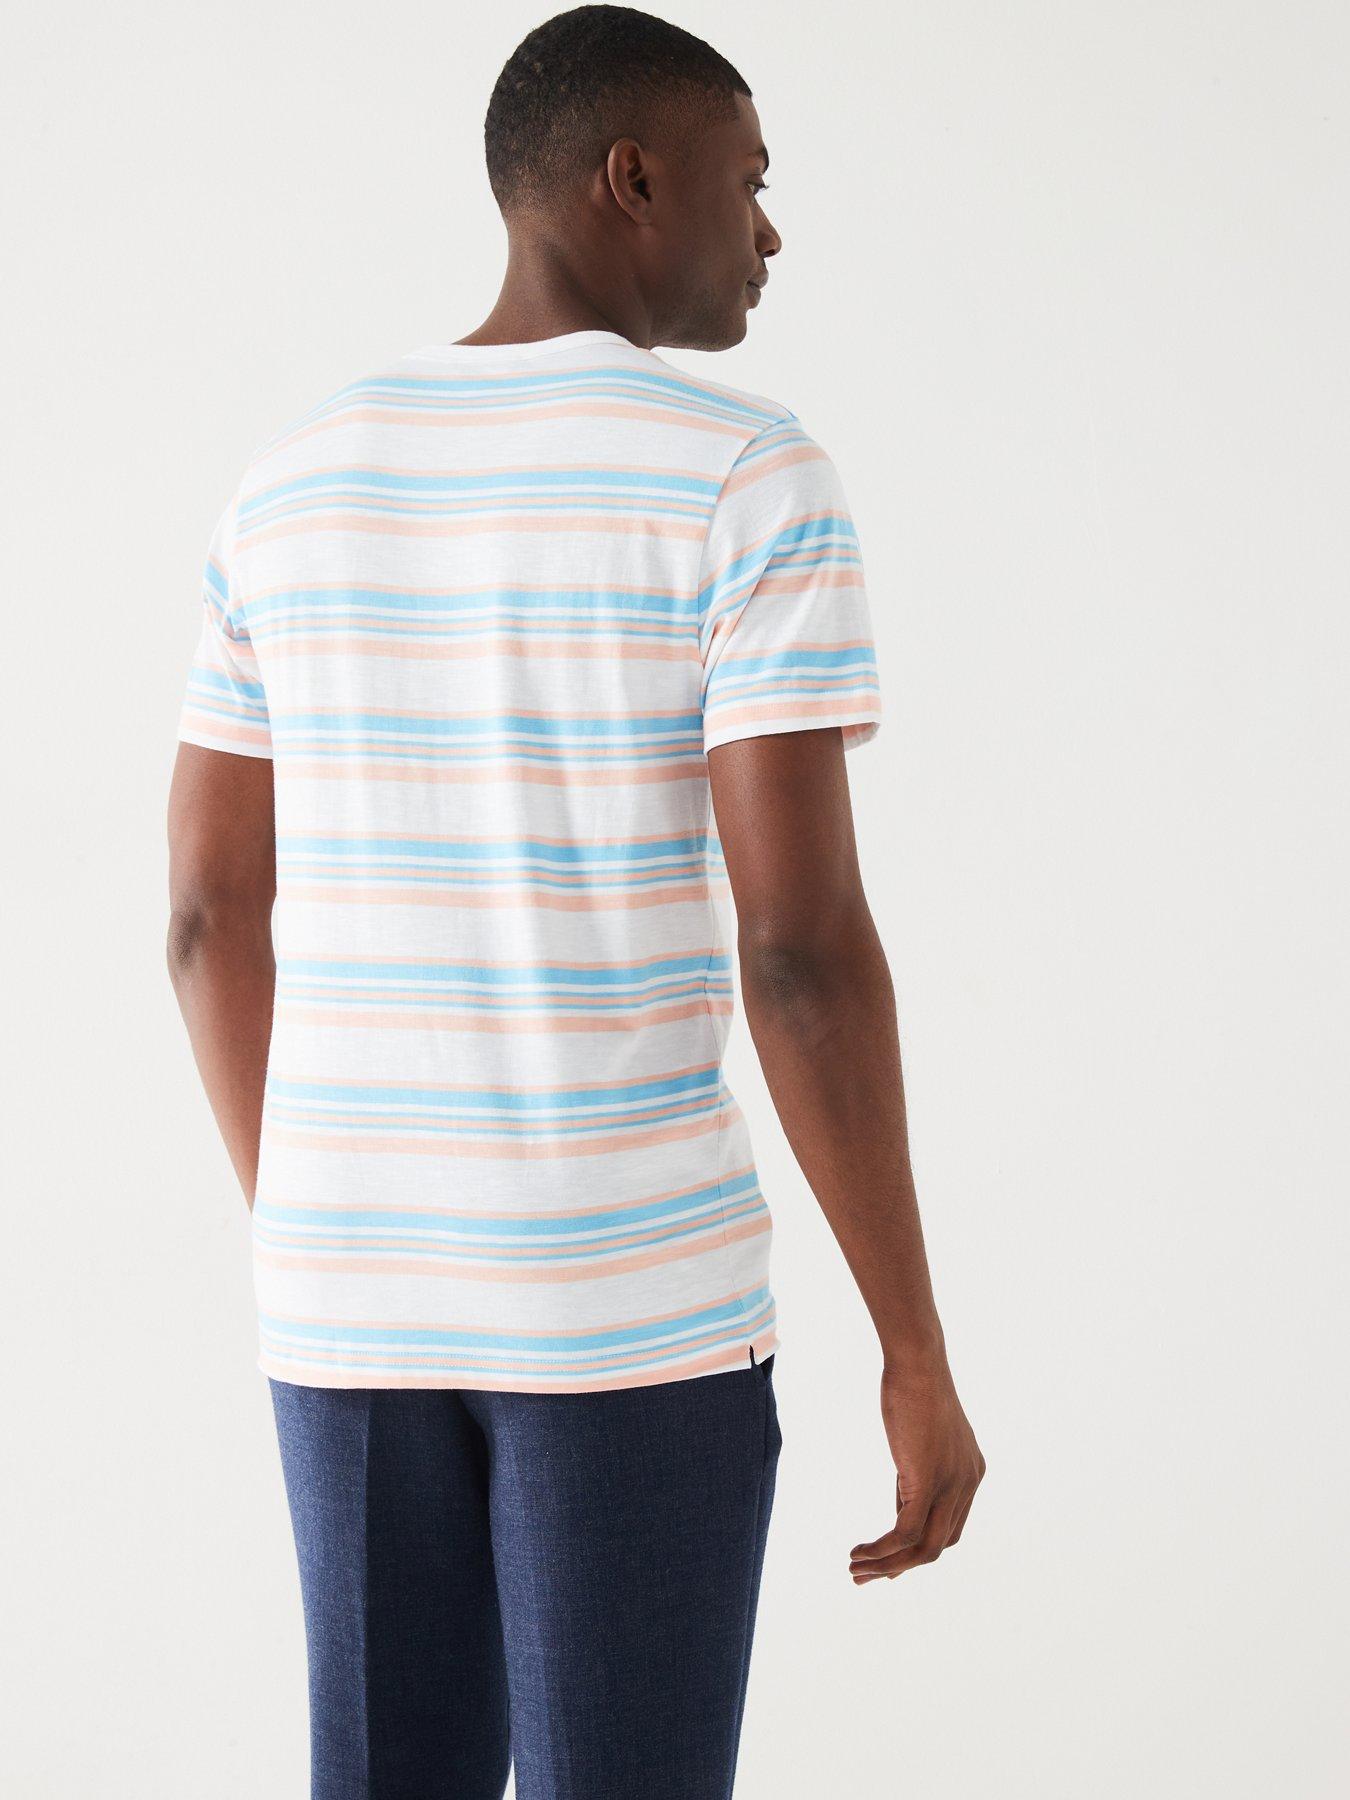 Very Man Yarn Dyed Slub T-Shirt - Multi | Very.co.uk